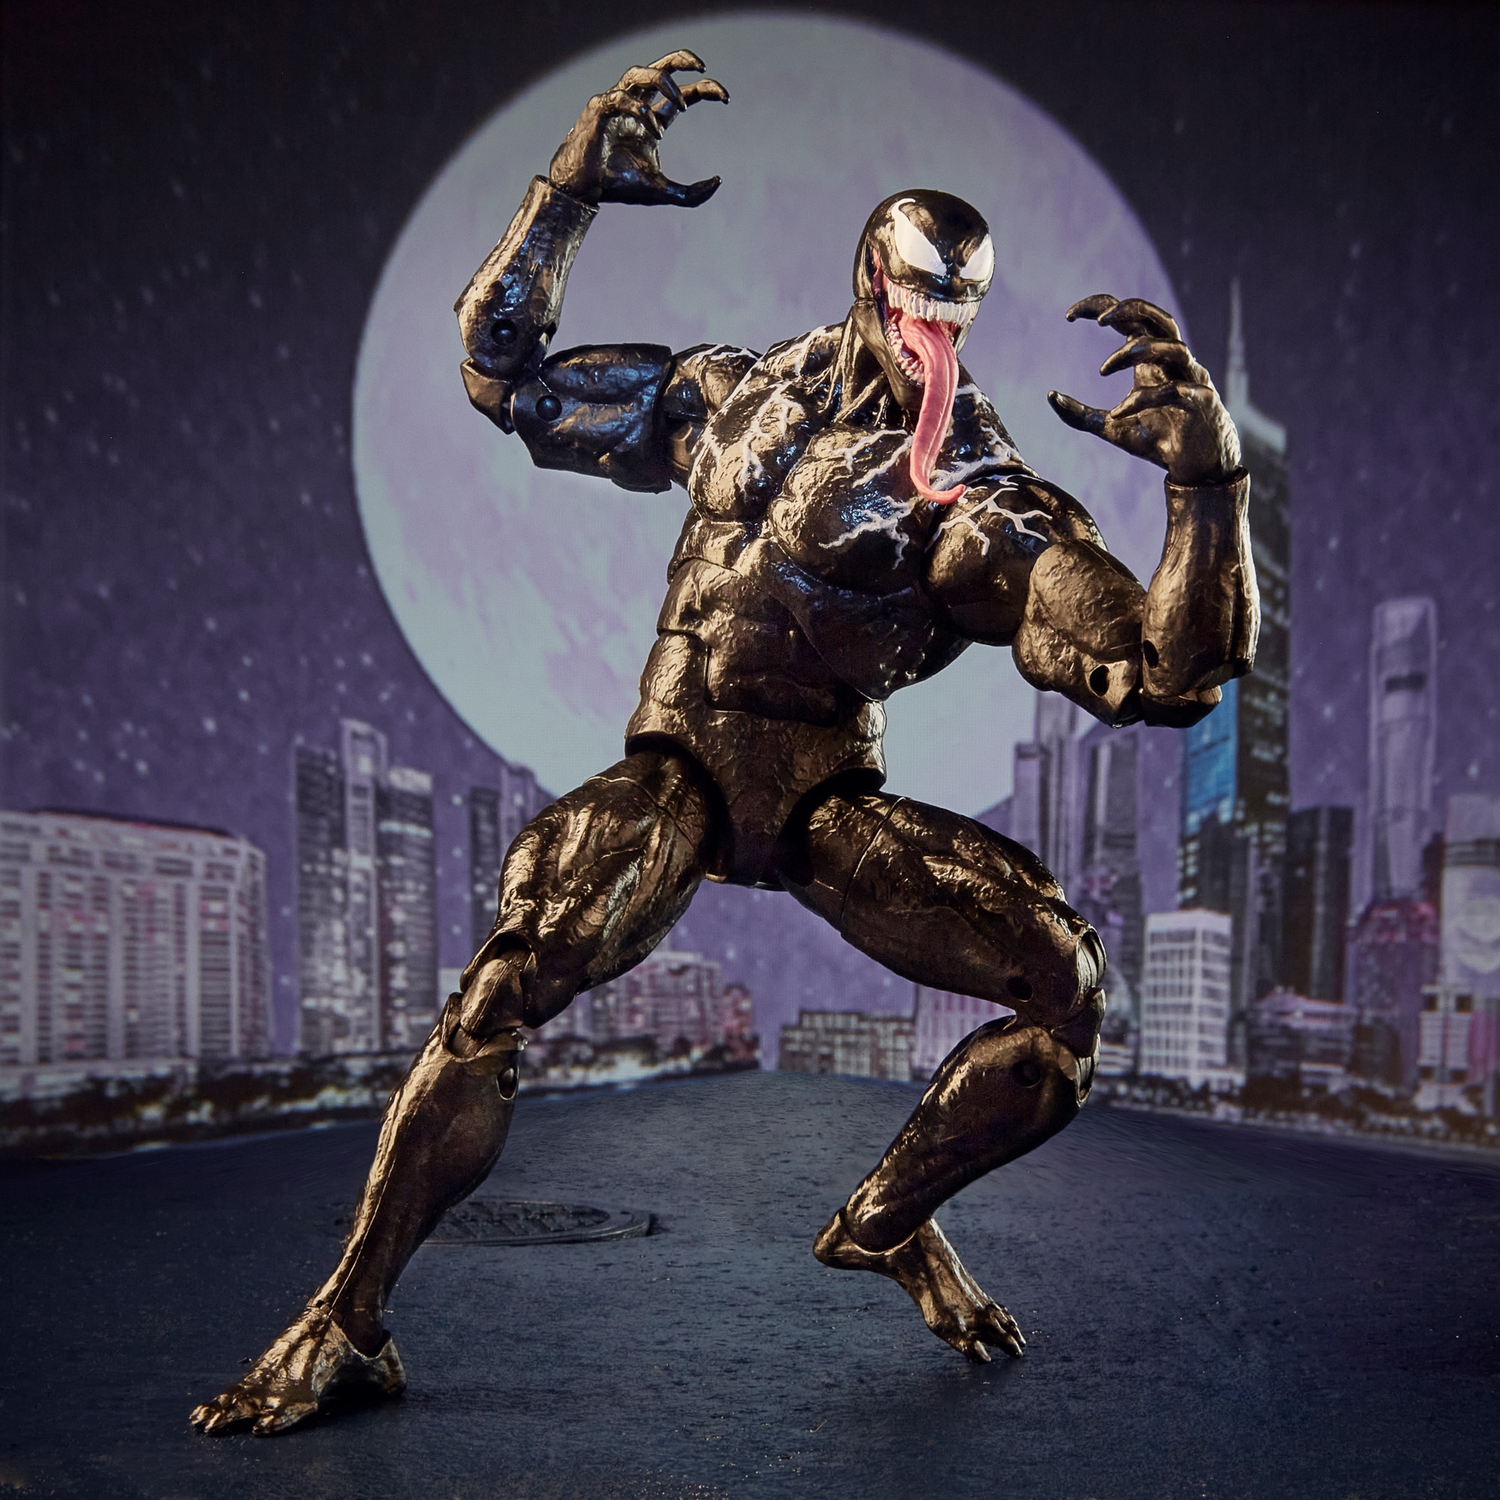 MARVEL LEGENDS SERIES 6-INCH VENOM Figure Assortment - Venom (6).jpg